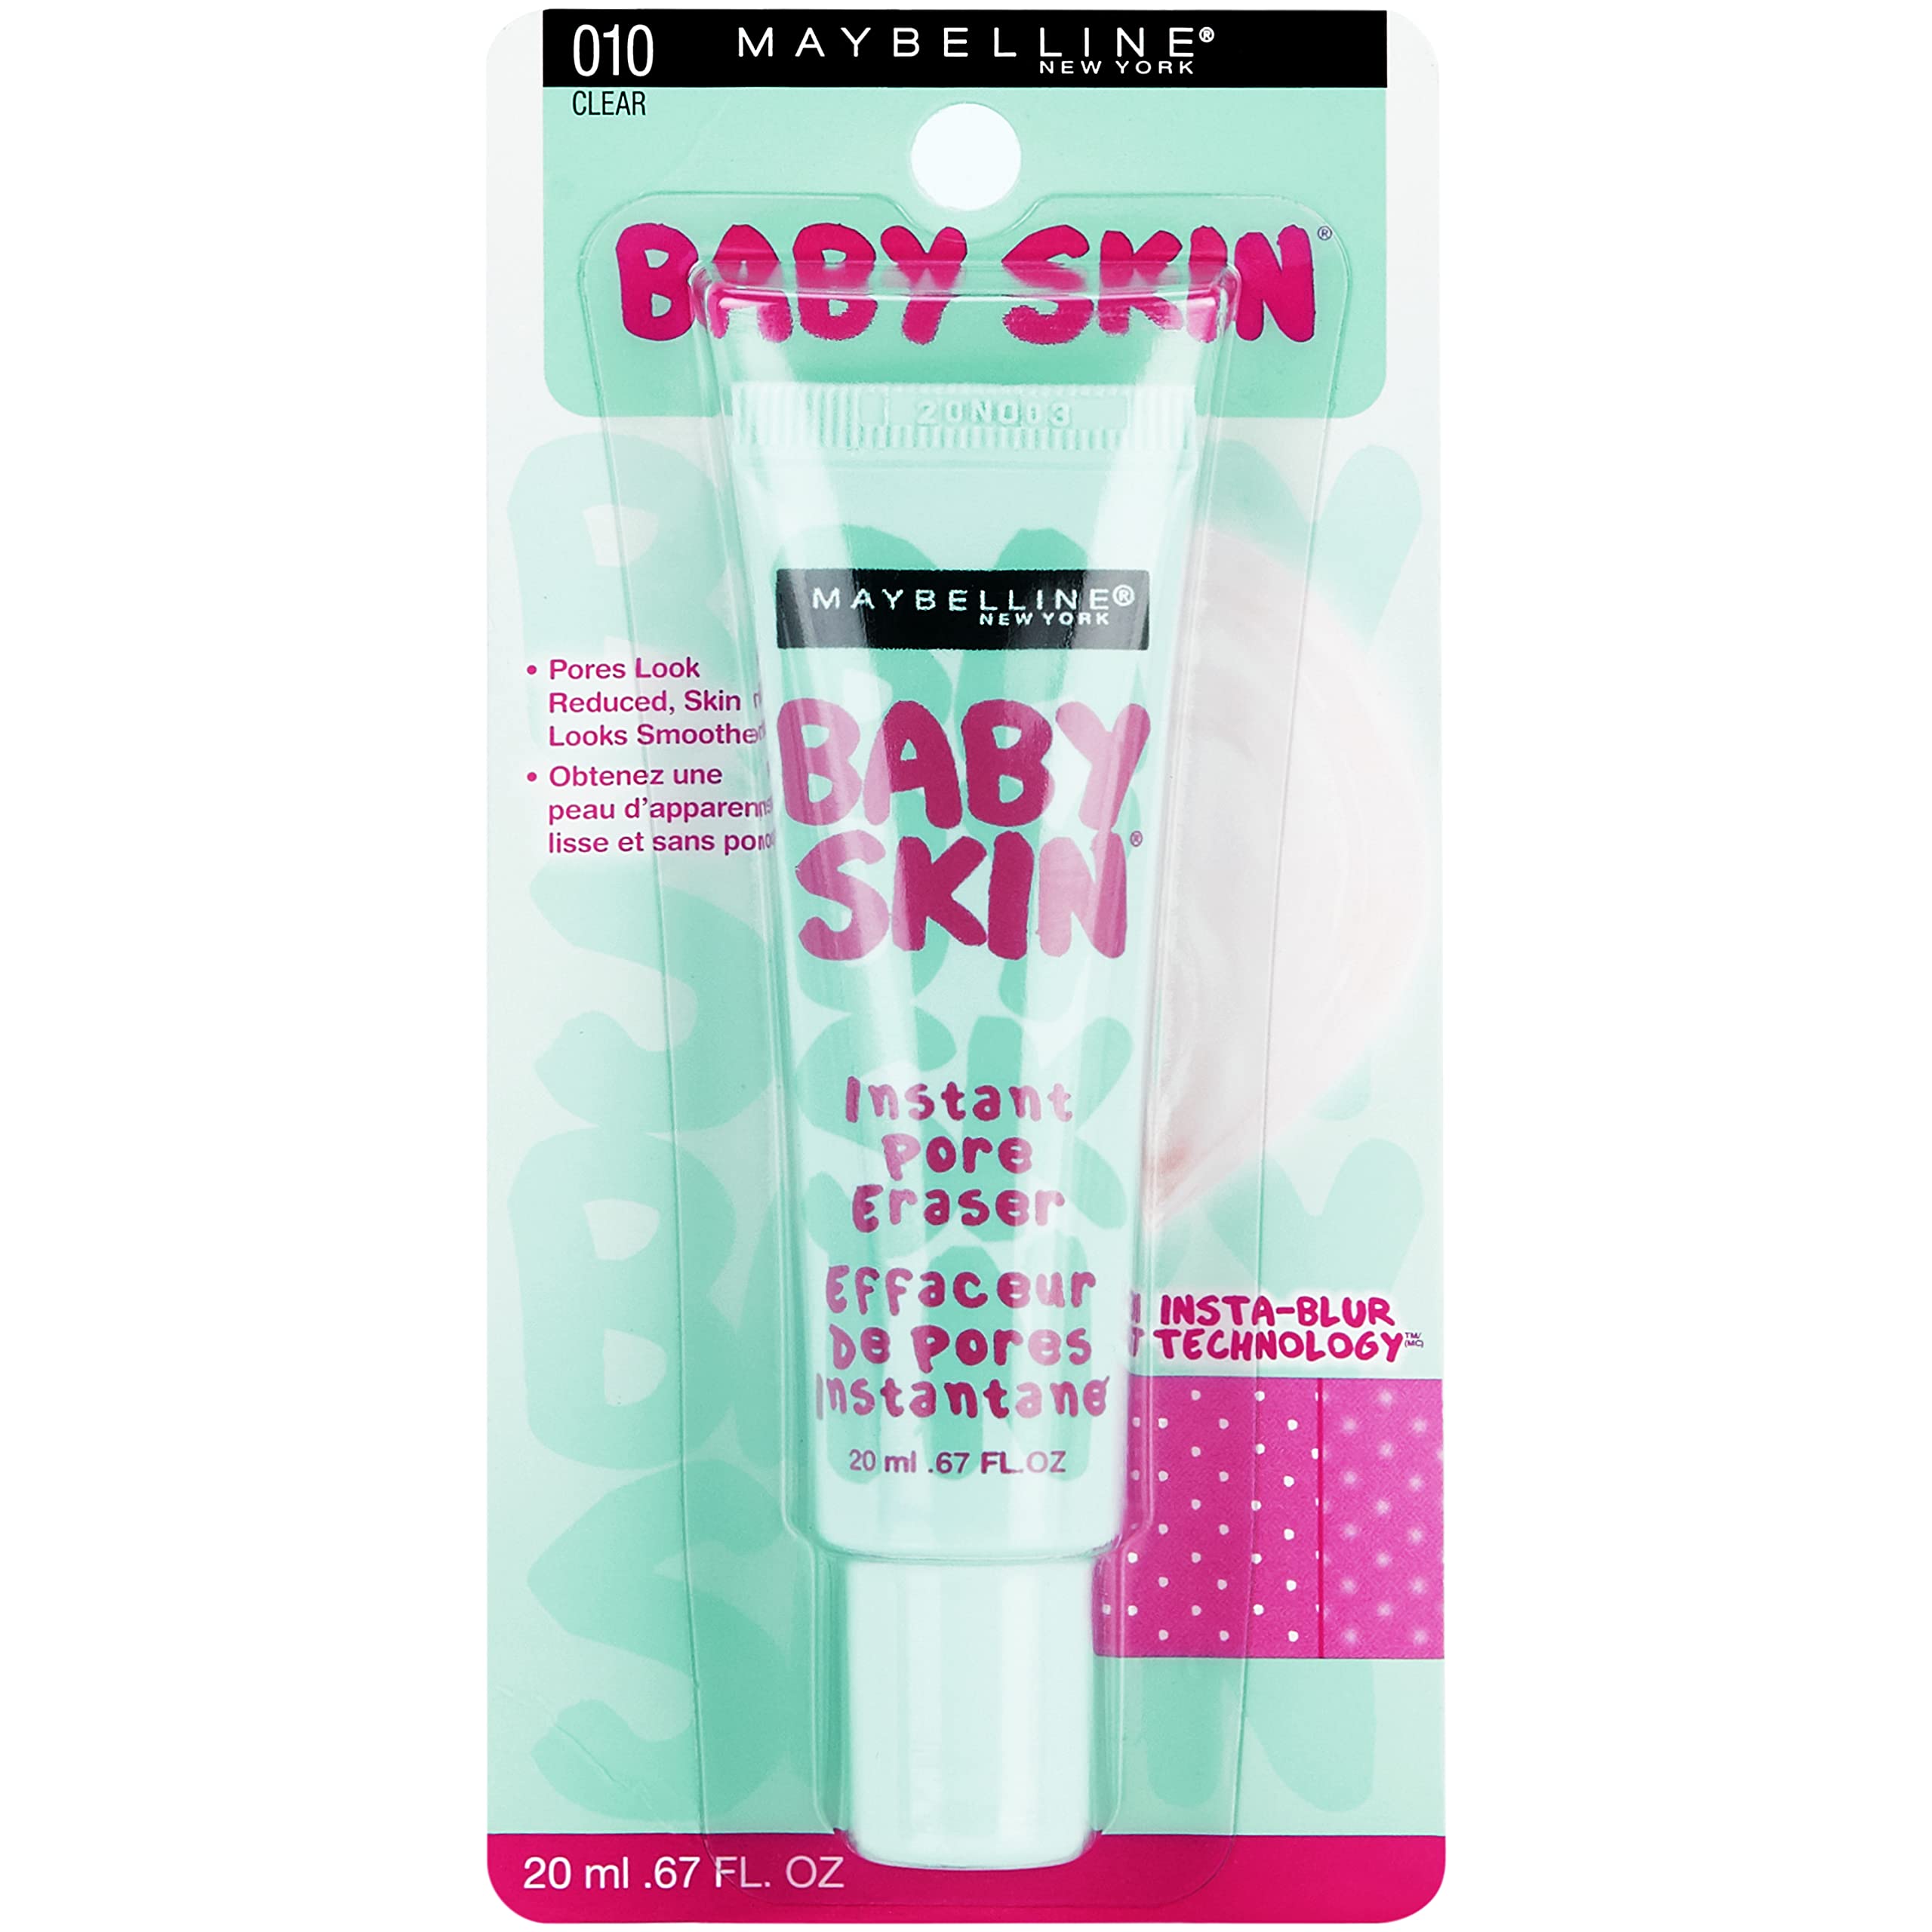 Maybelline New York Baby Skin Instant Pore Eraser Primer Makeup, Clear, 1 Count